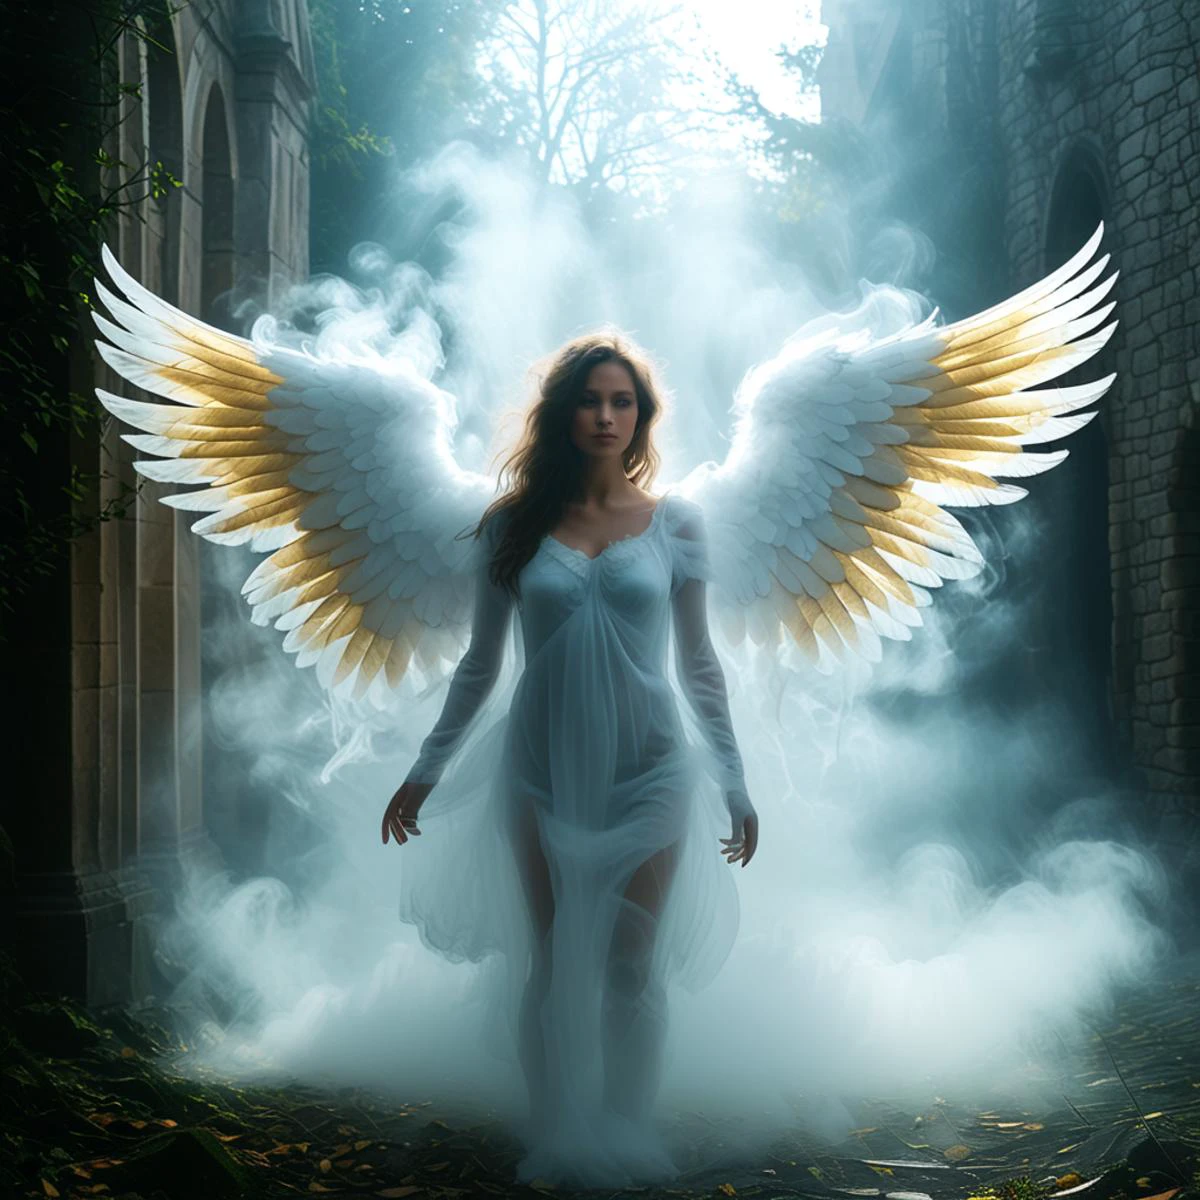 mdfg 带金色天使翅膀的雾女, 背后有明亮的光芒, 在城堡裡,.特寫 